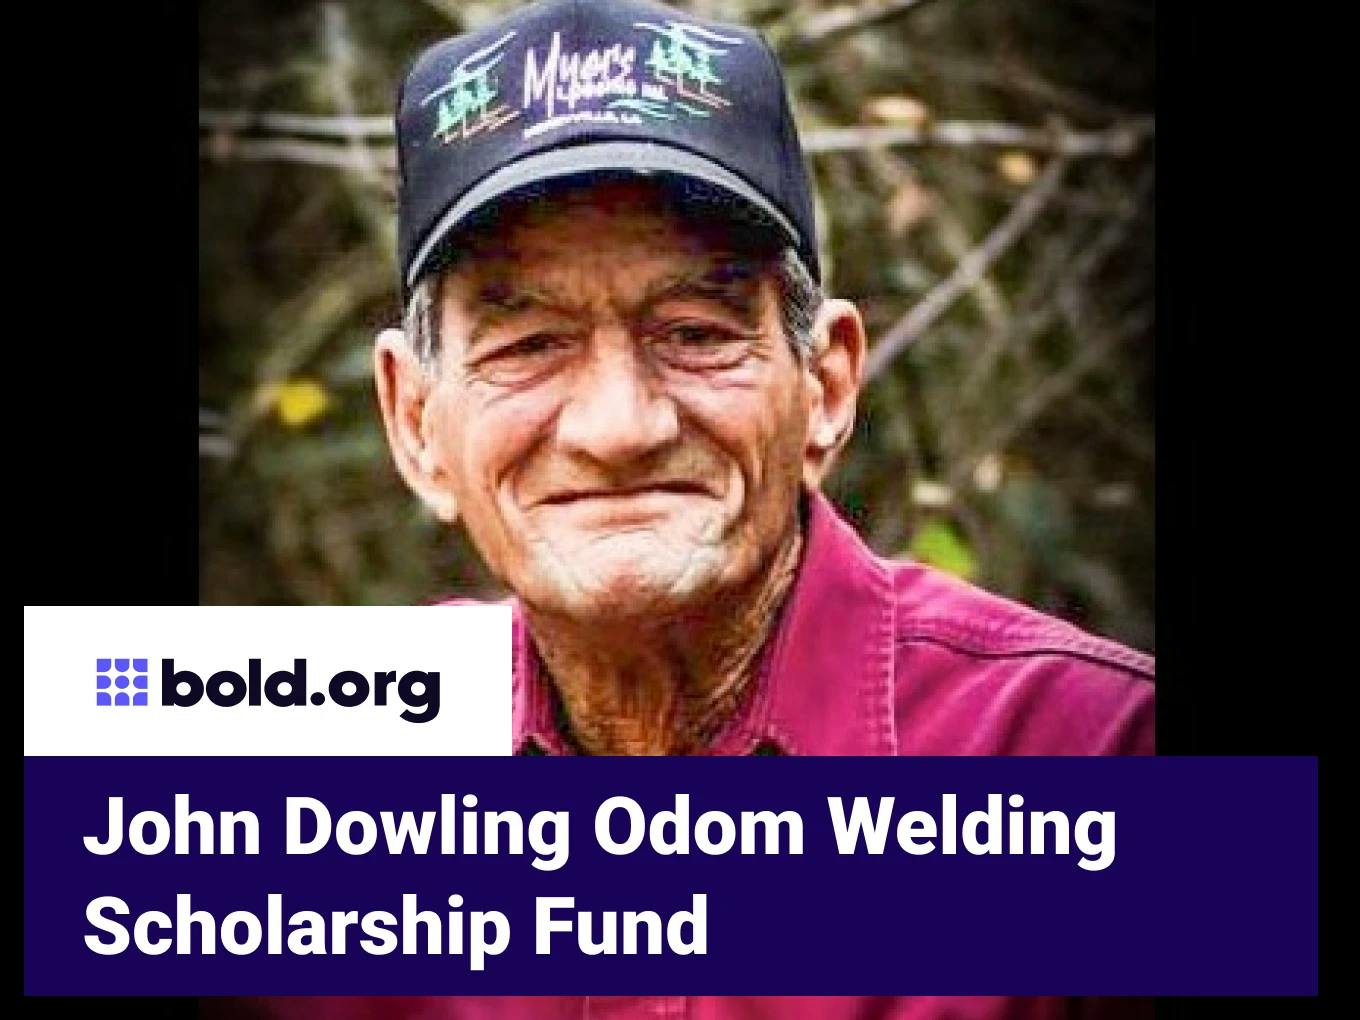 John Dowling Odom Welding Scholarship Fund